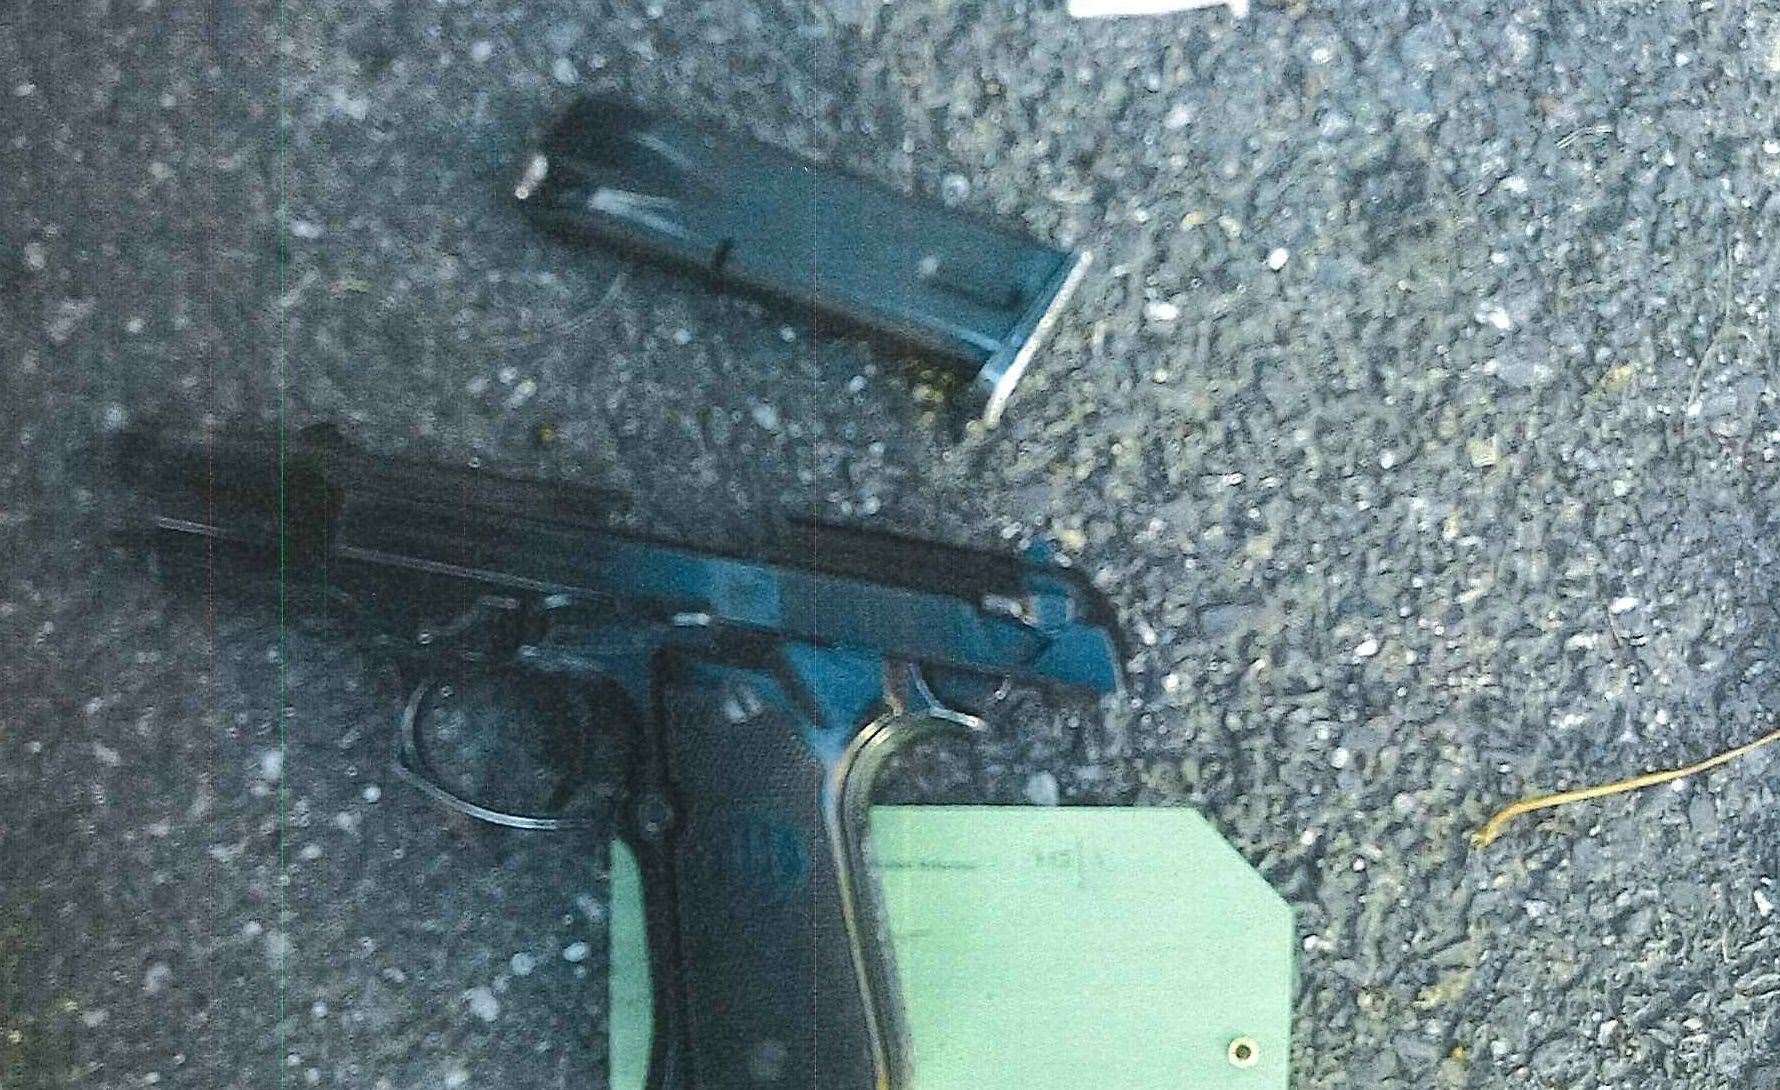 A Berreta handgun was found dumped at the scene. Picture: Kent Police